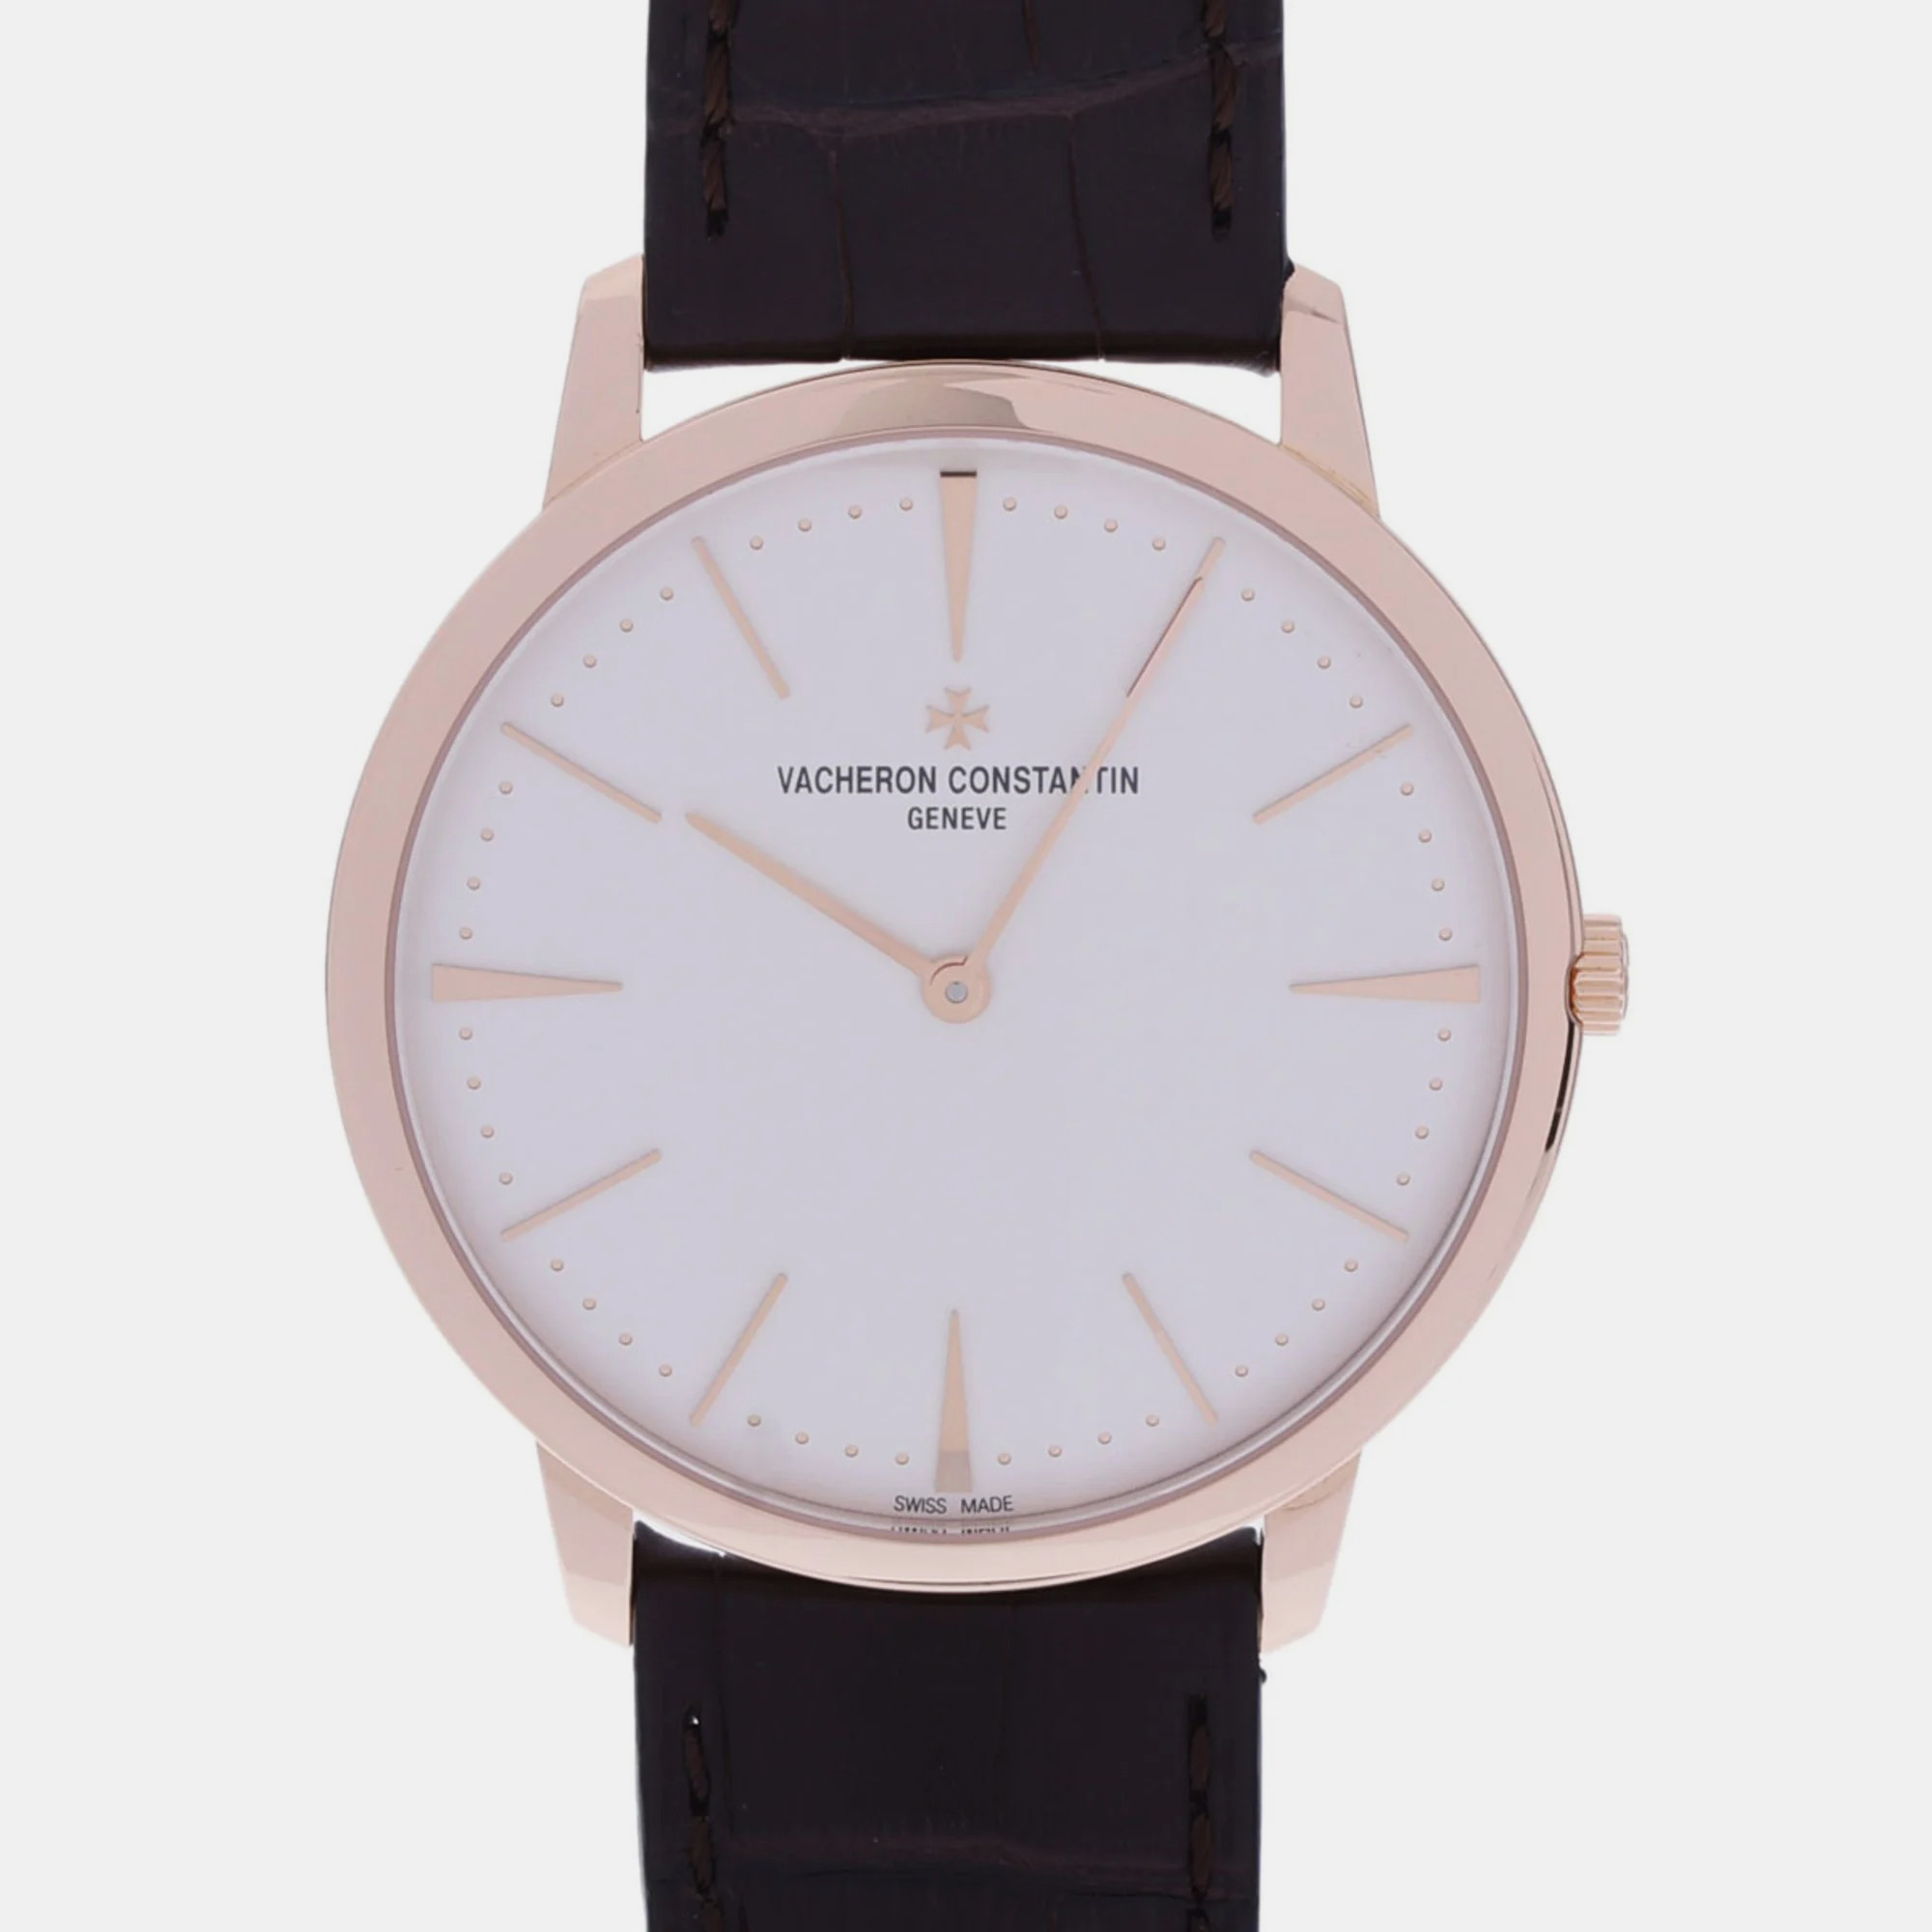 Pre-owned Vacheron Constantin Silver 18k Rose Gold Patrimony 81180/000r-9159 Manual Winding Men's Wristwatch 40 Mm